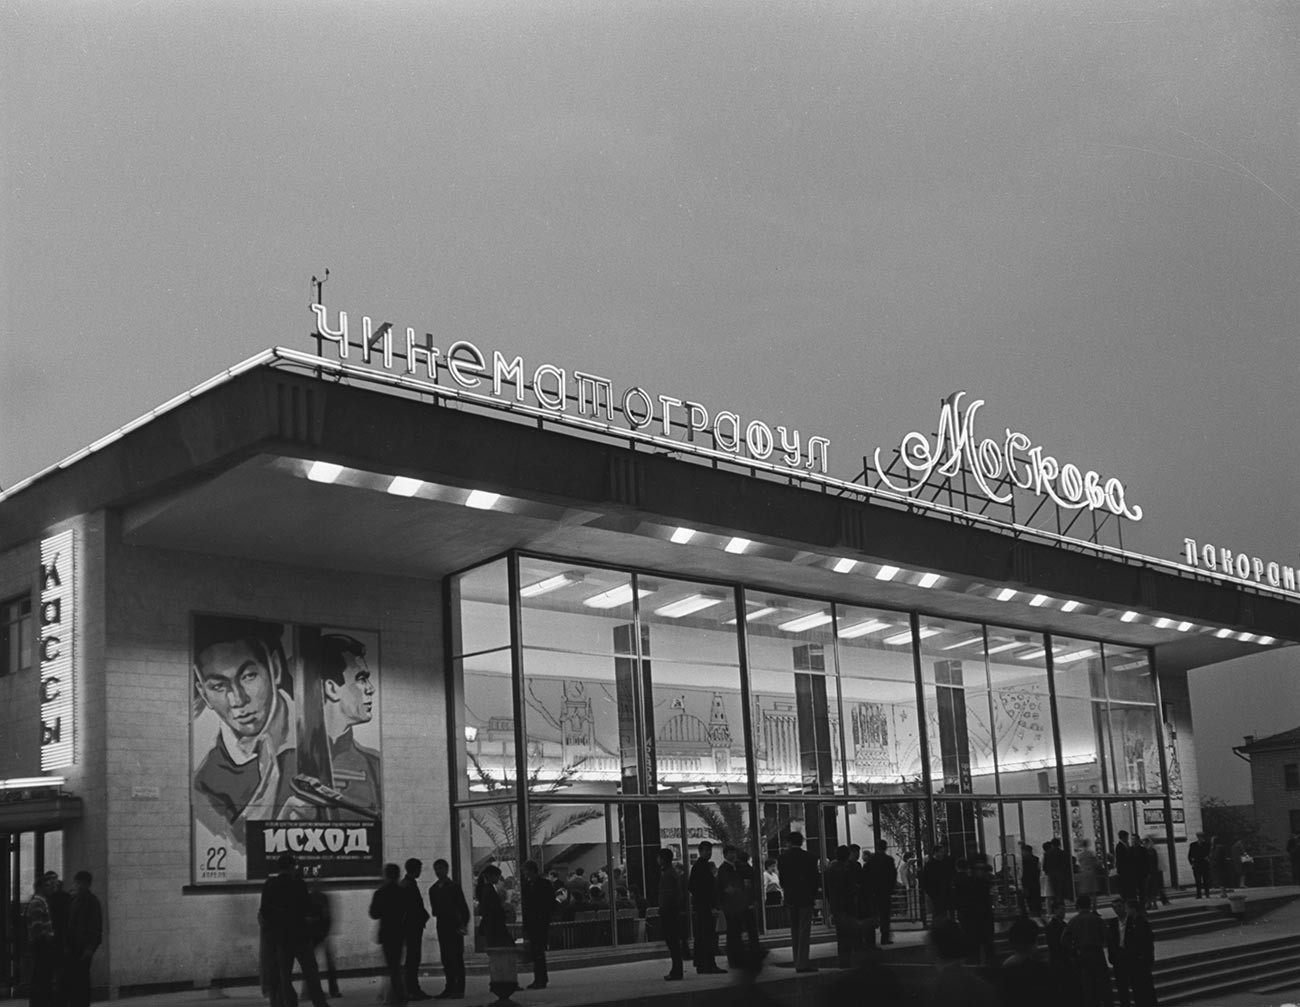 Moskva movie theater in Chisinau, 1968.  